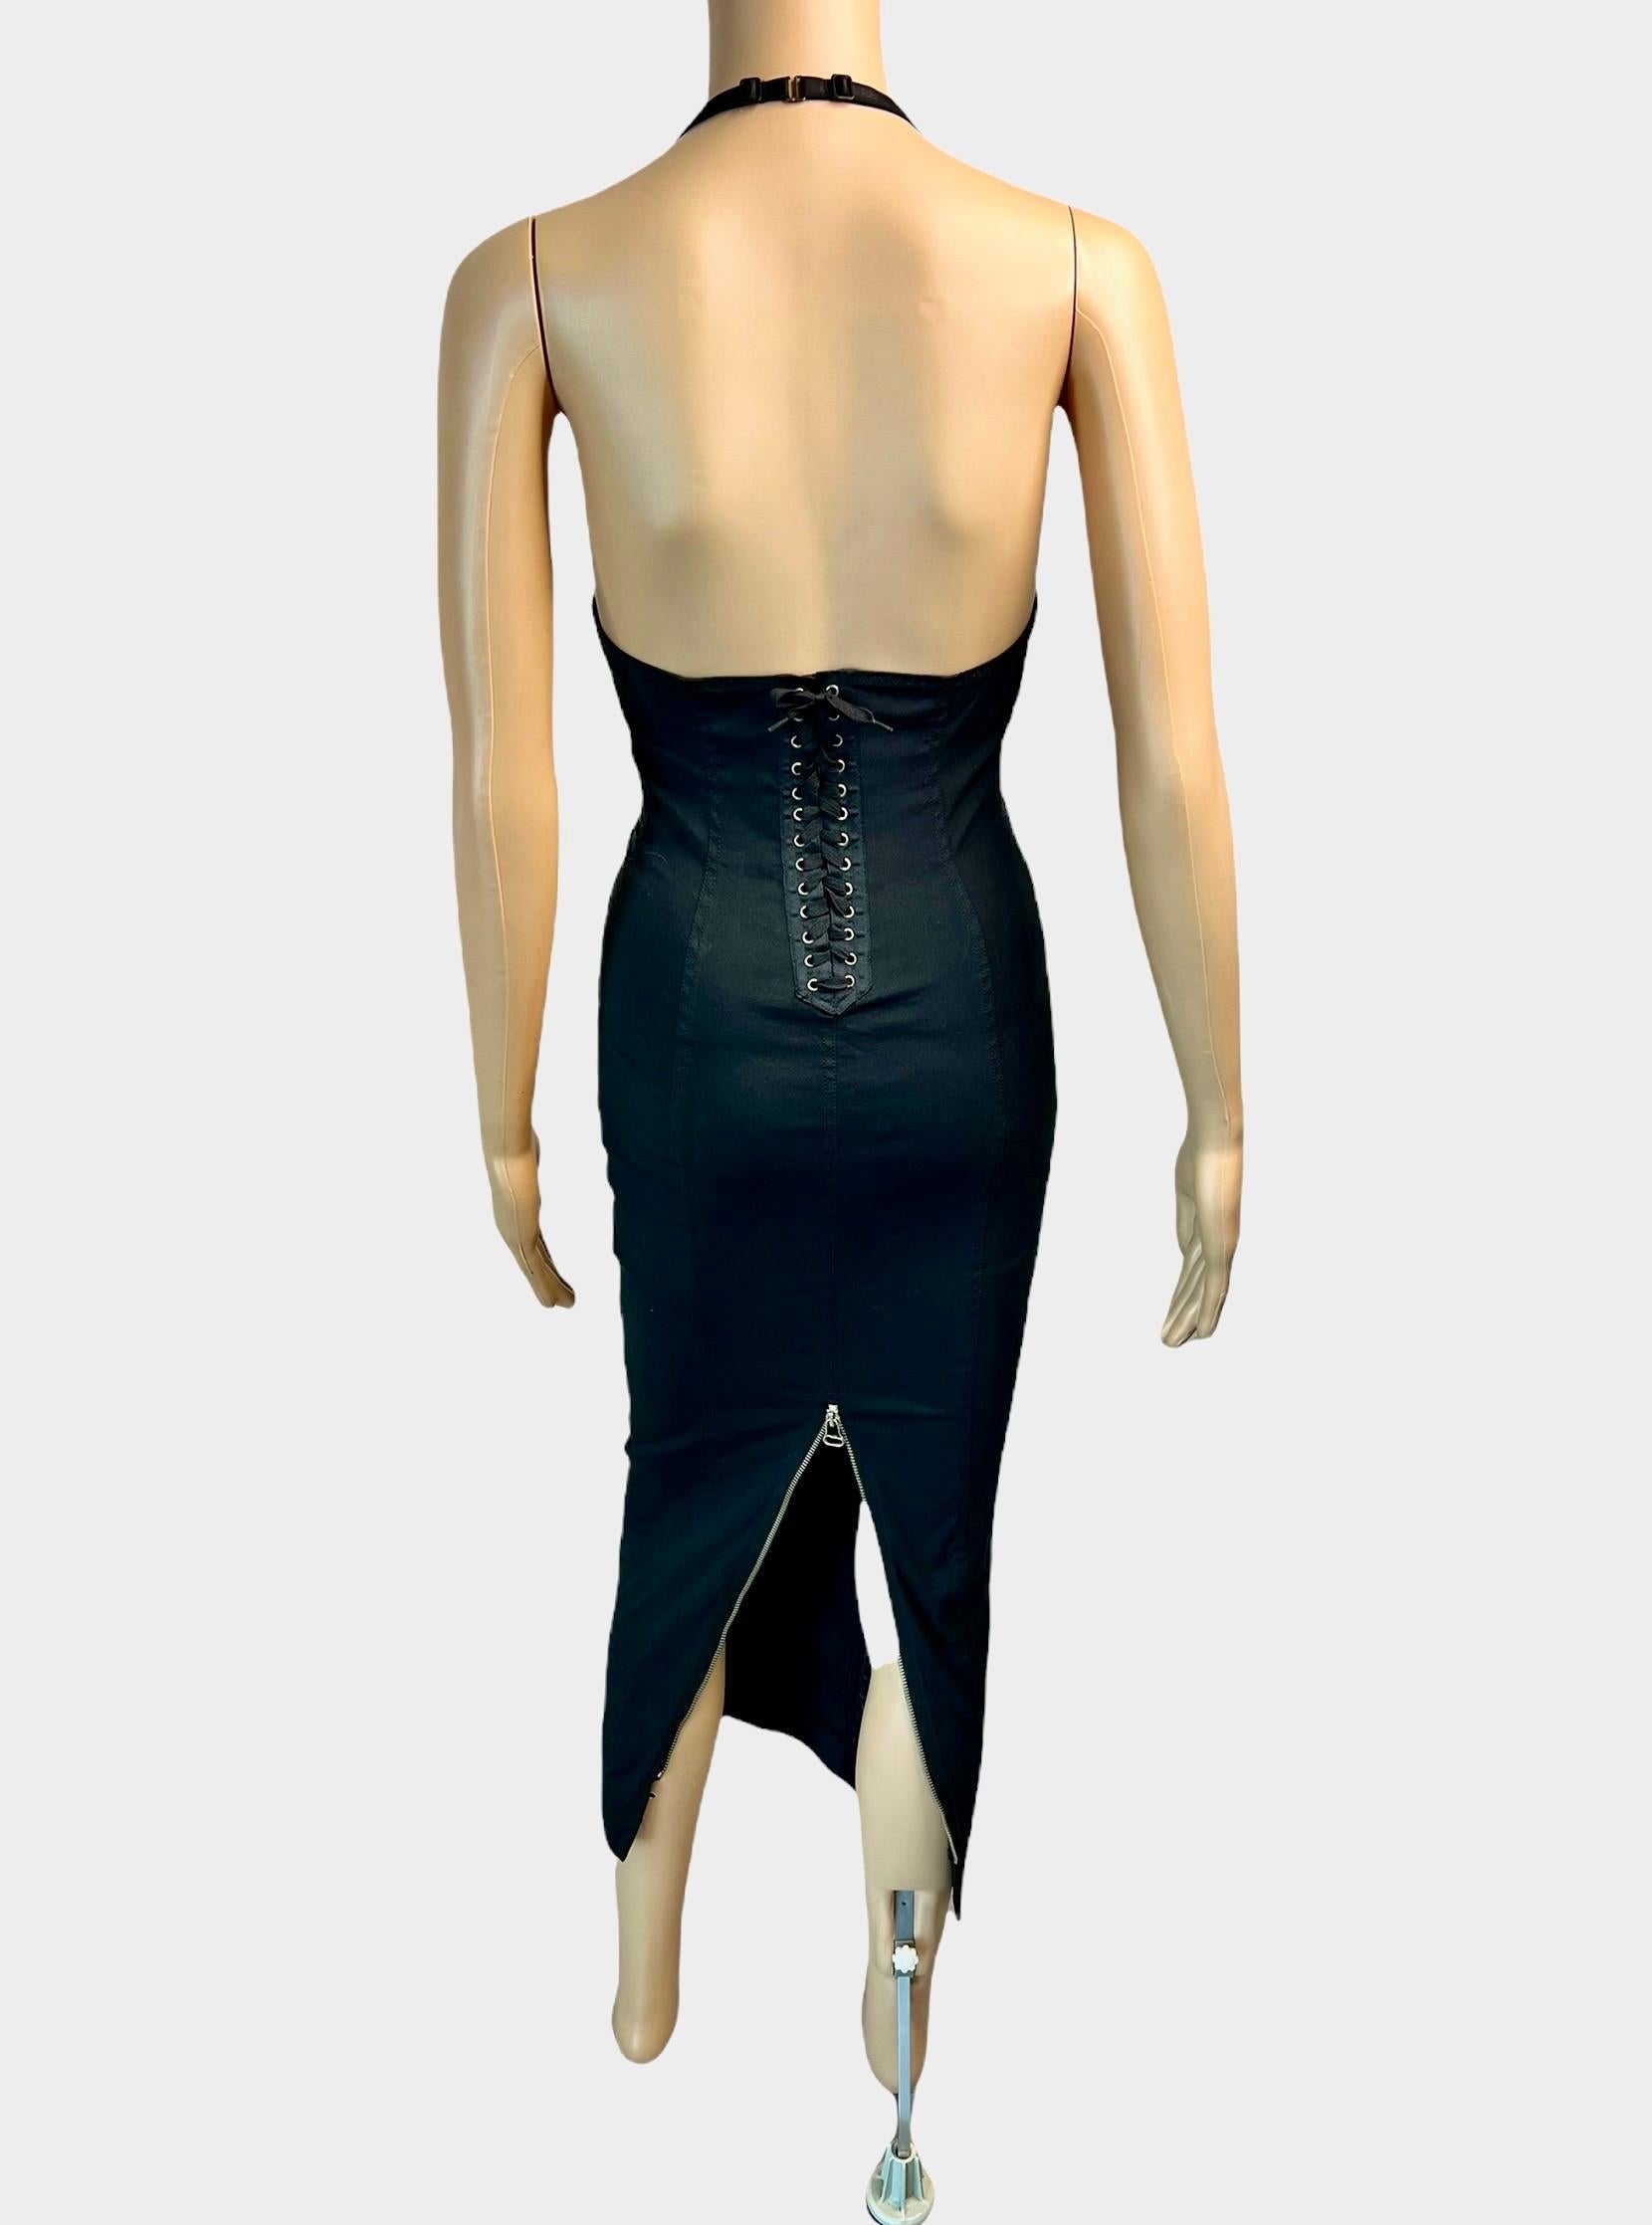 Women's or Men's Jean Paul Gaultier 1990's Vintage Cone Bra Corset Bondage Black Evening Dress